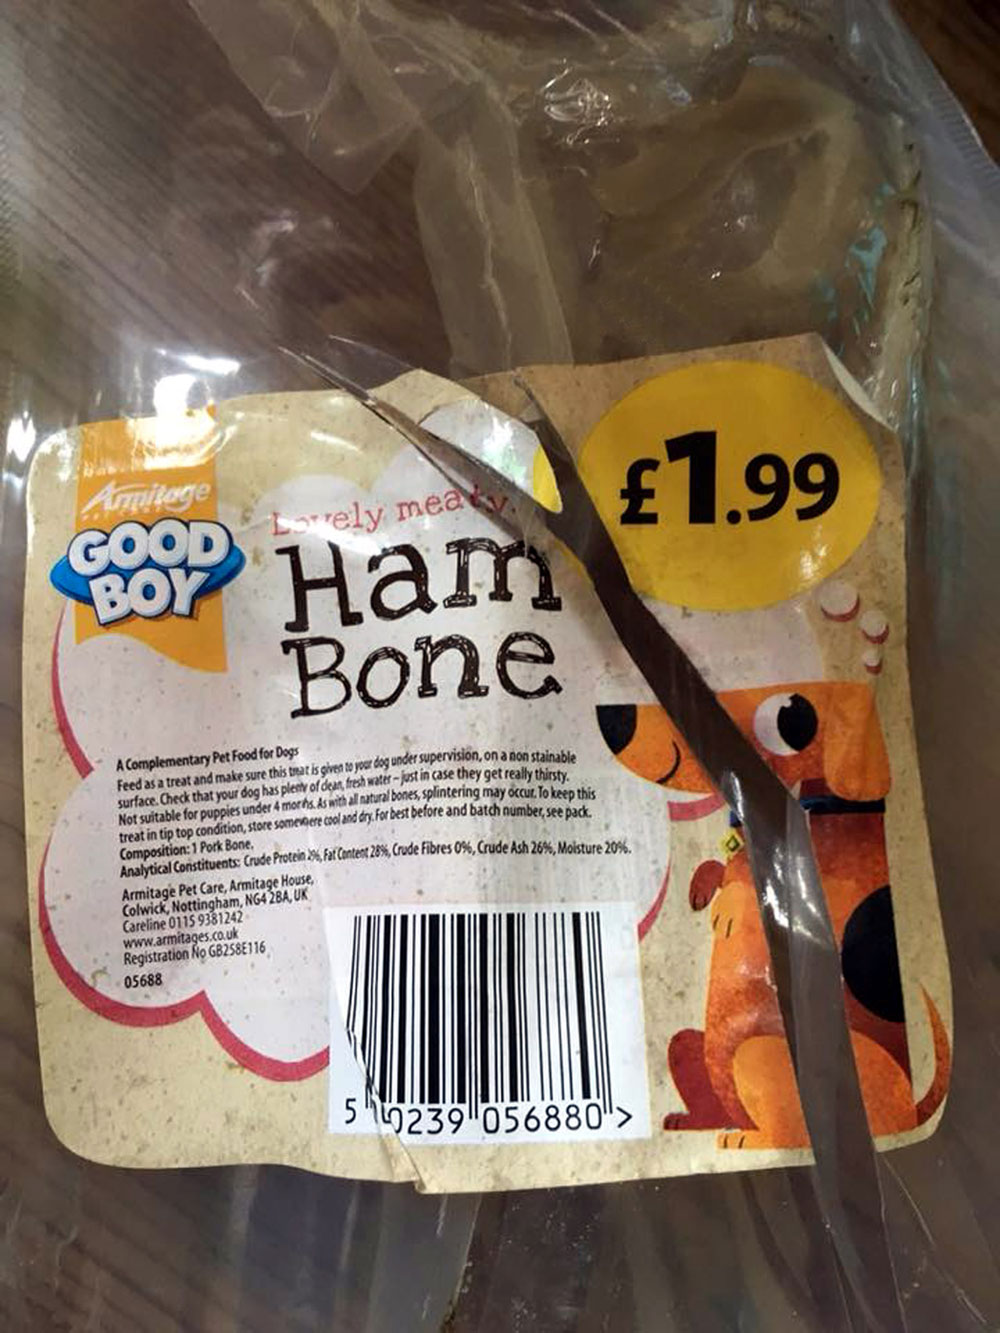 The Armitage ham bone that led to Mia's death